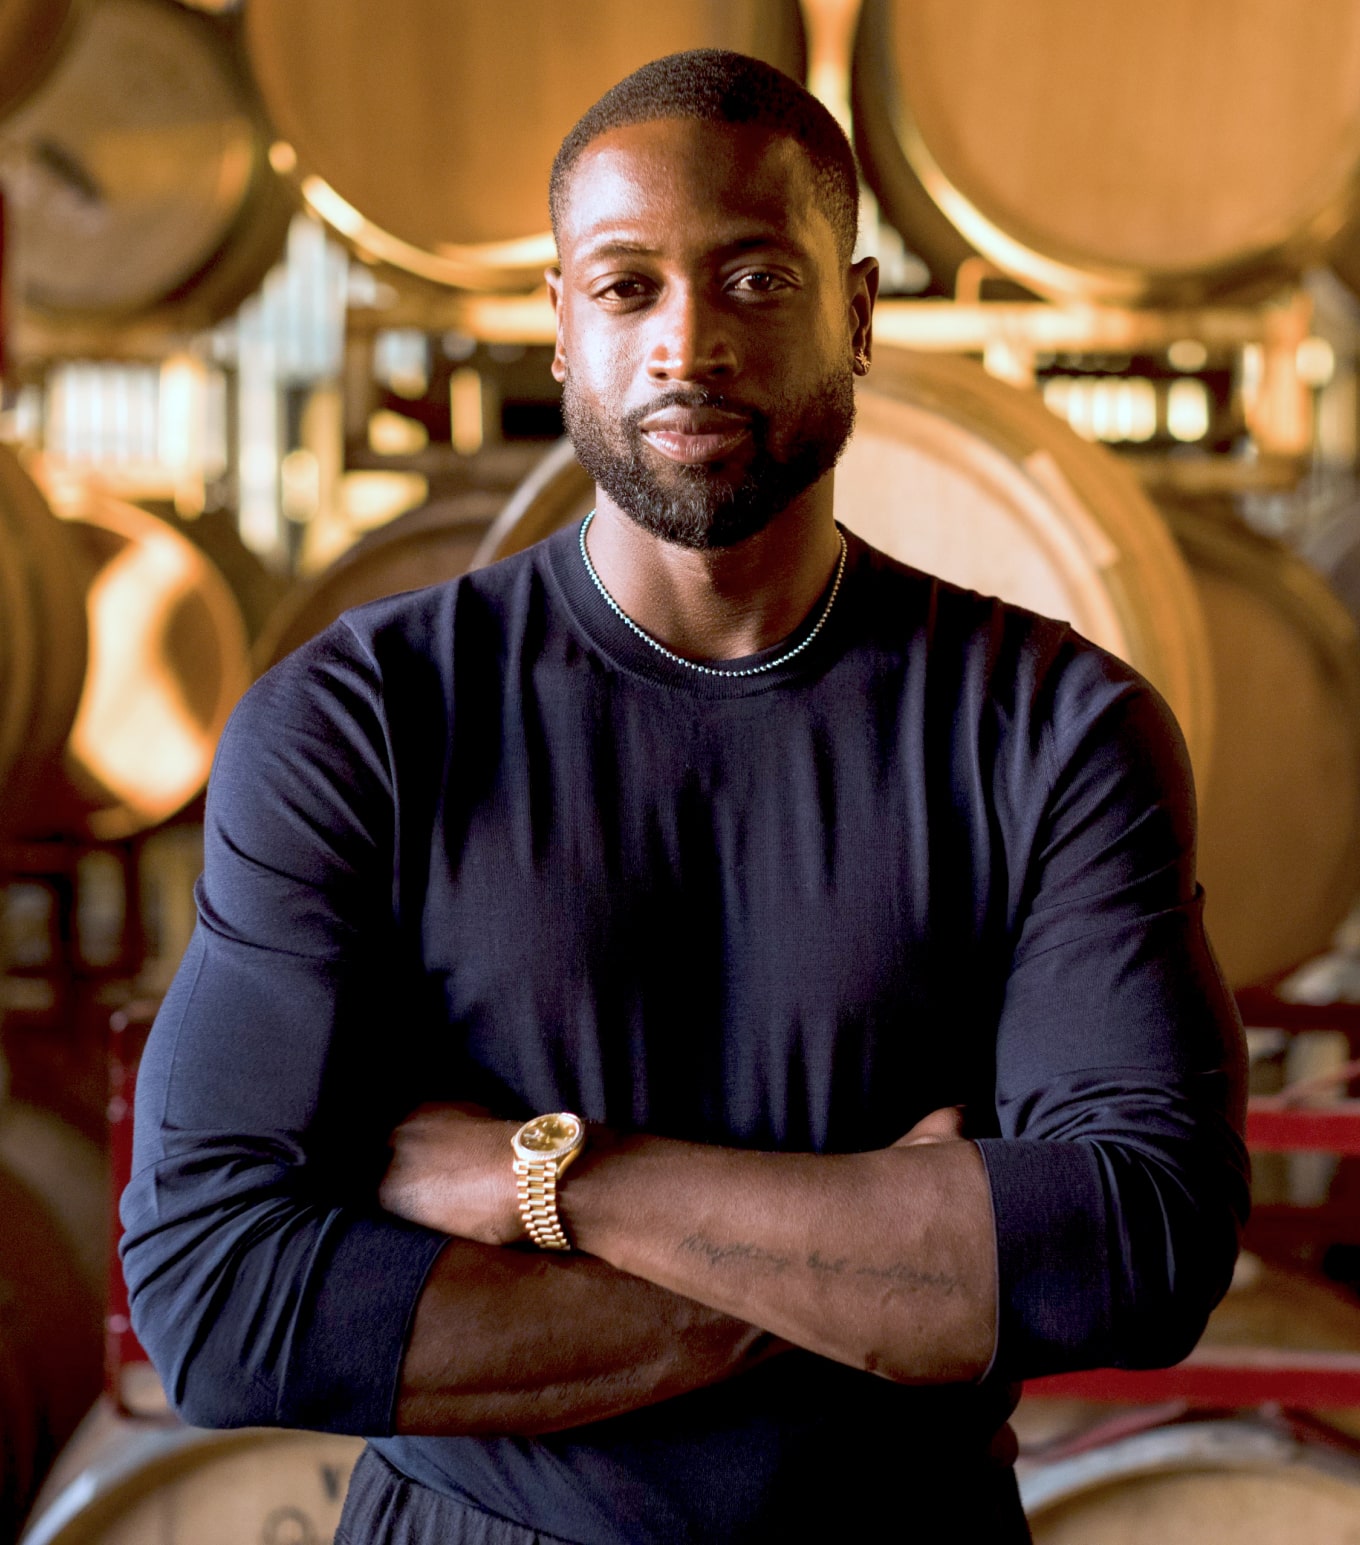 Dwayne Wade poses in front of wine barrels